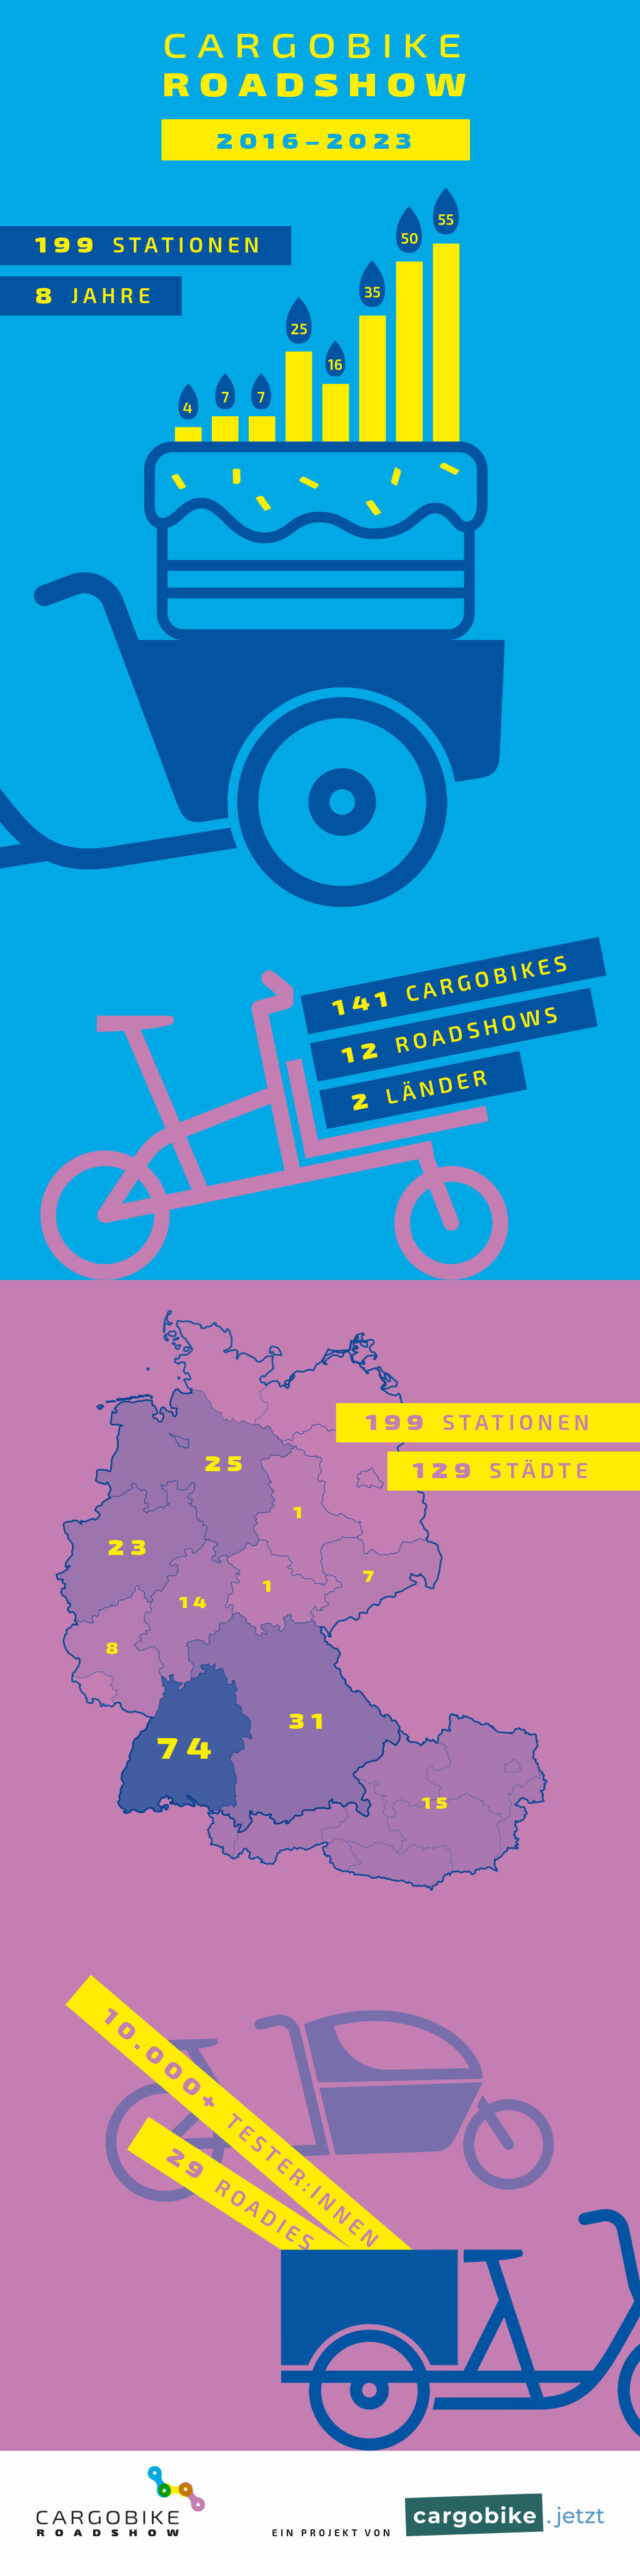 Cargobike Roadshow in Zahlen